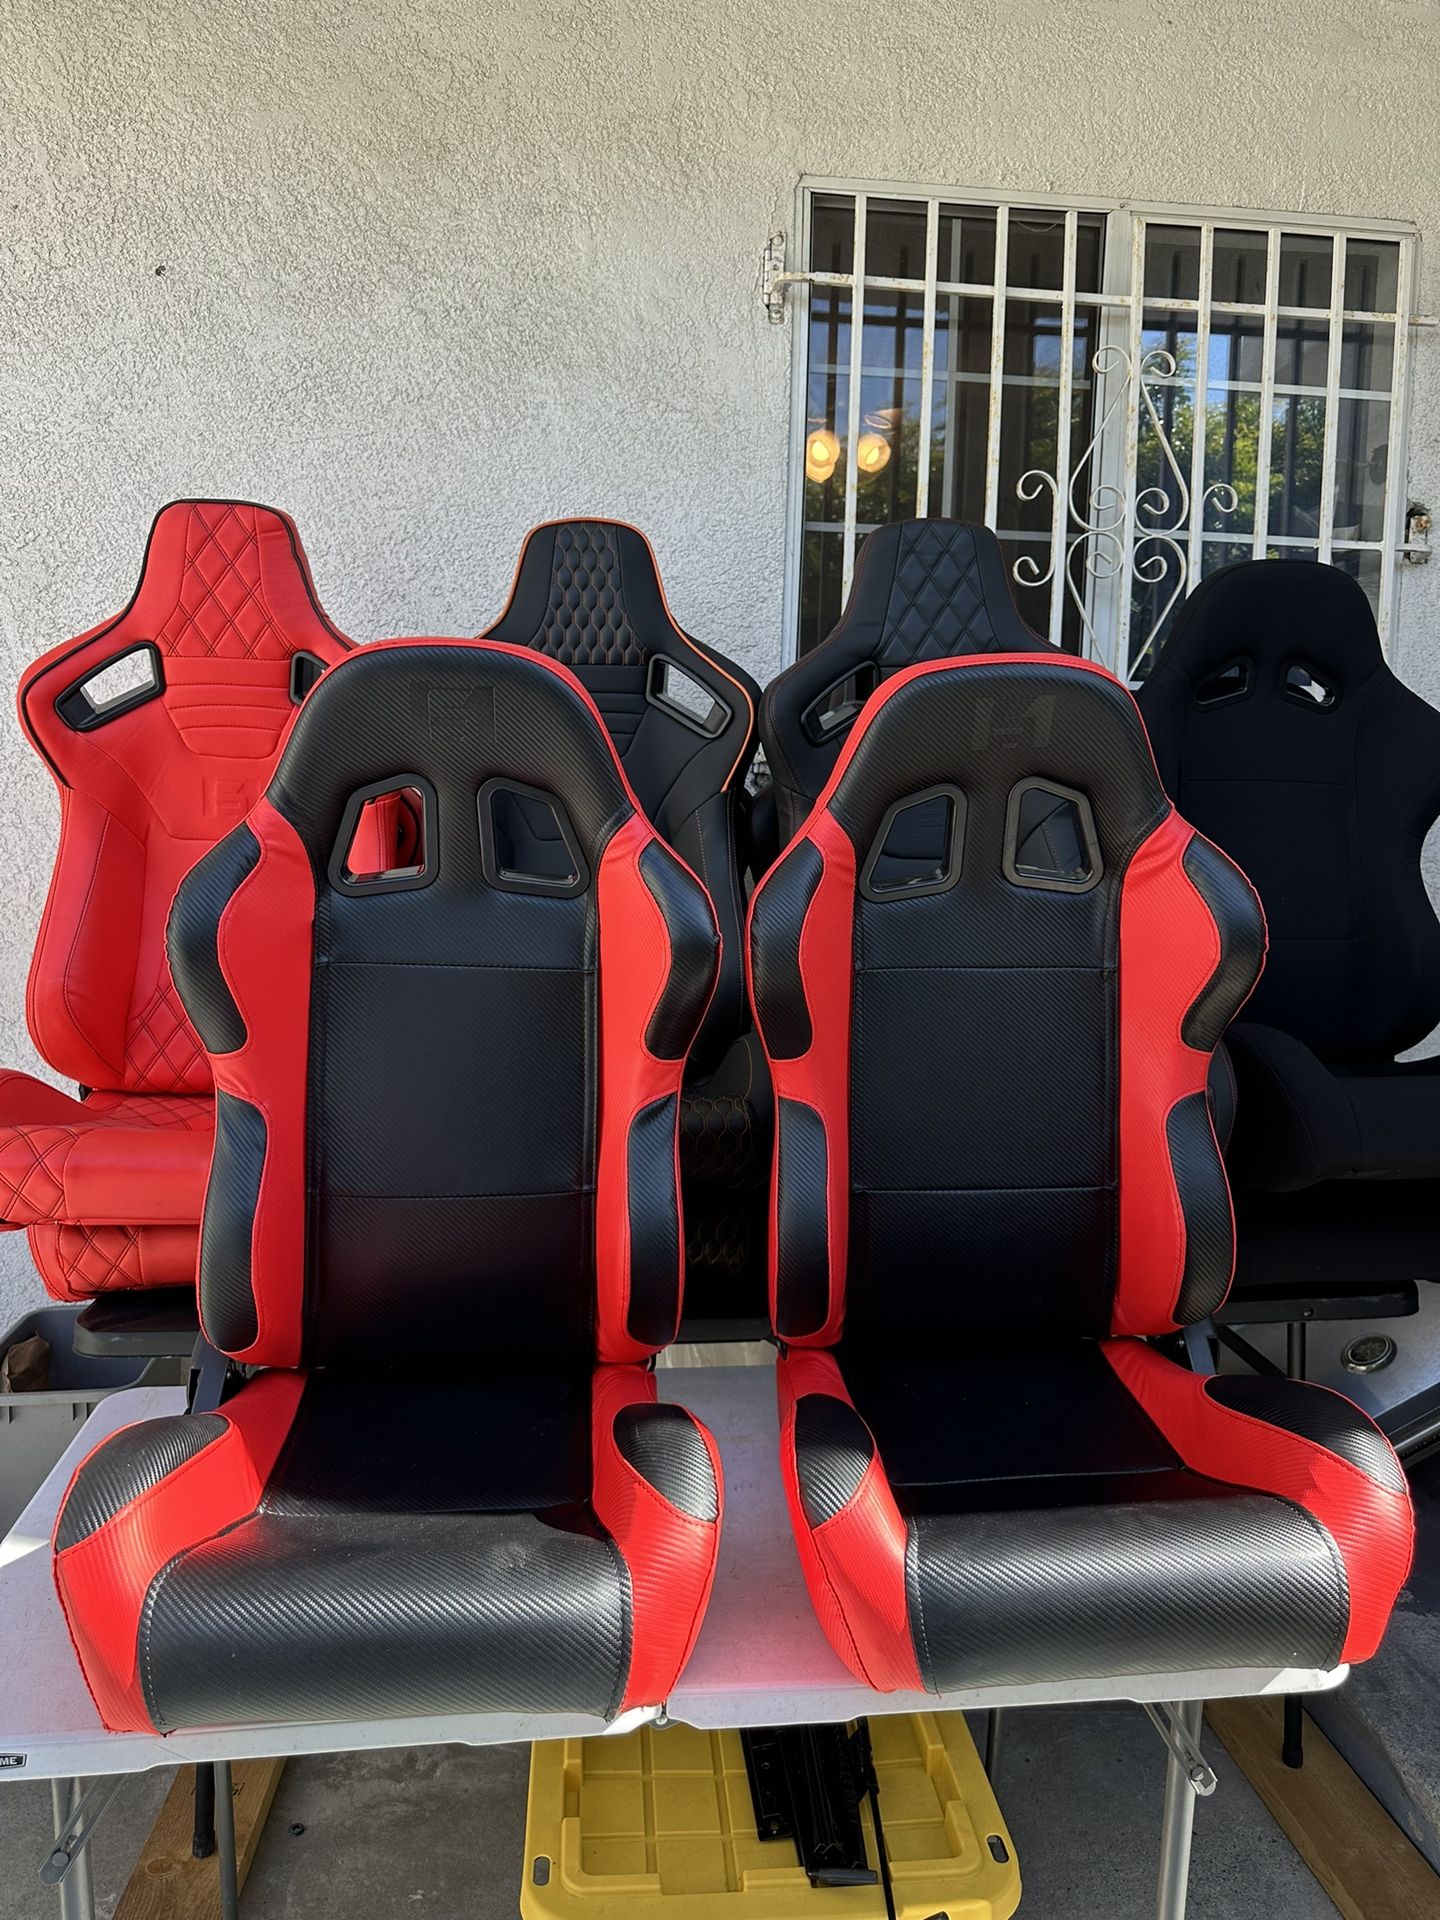 Universal Racing Seats